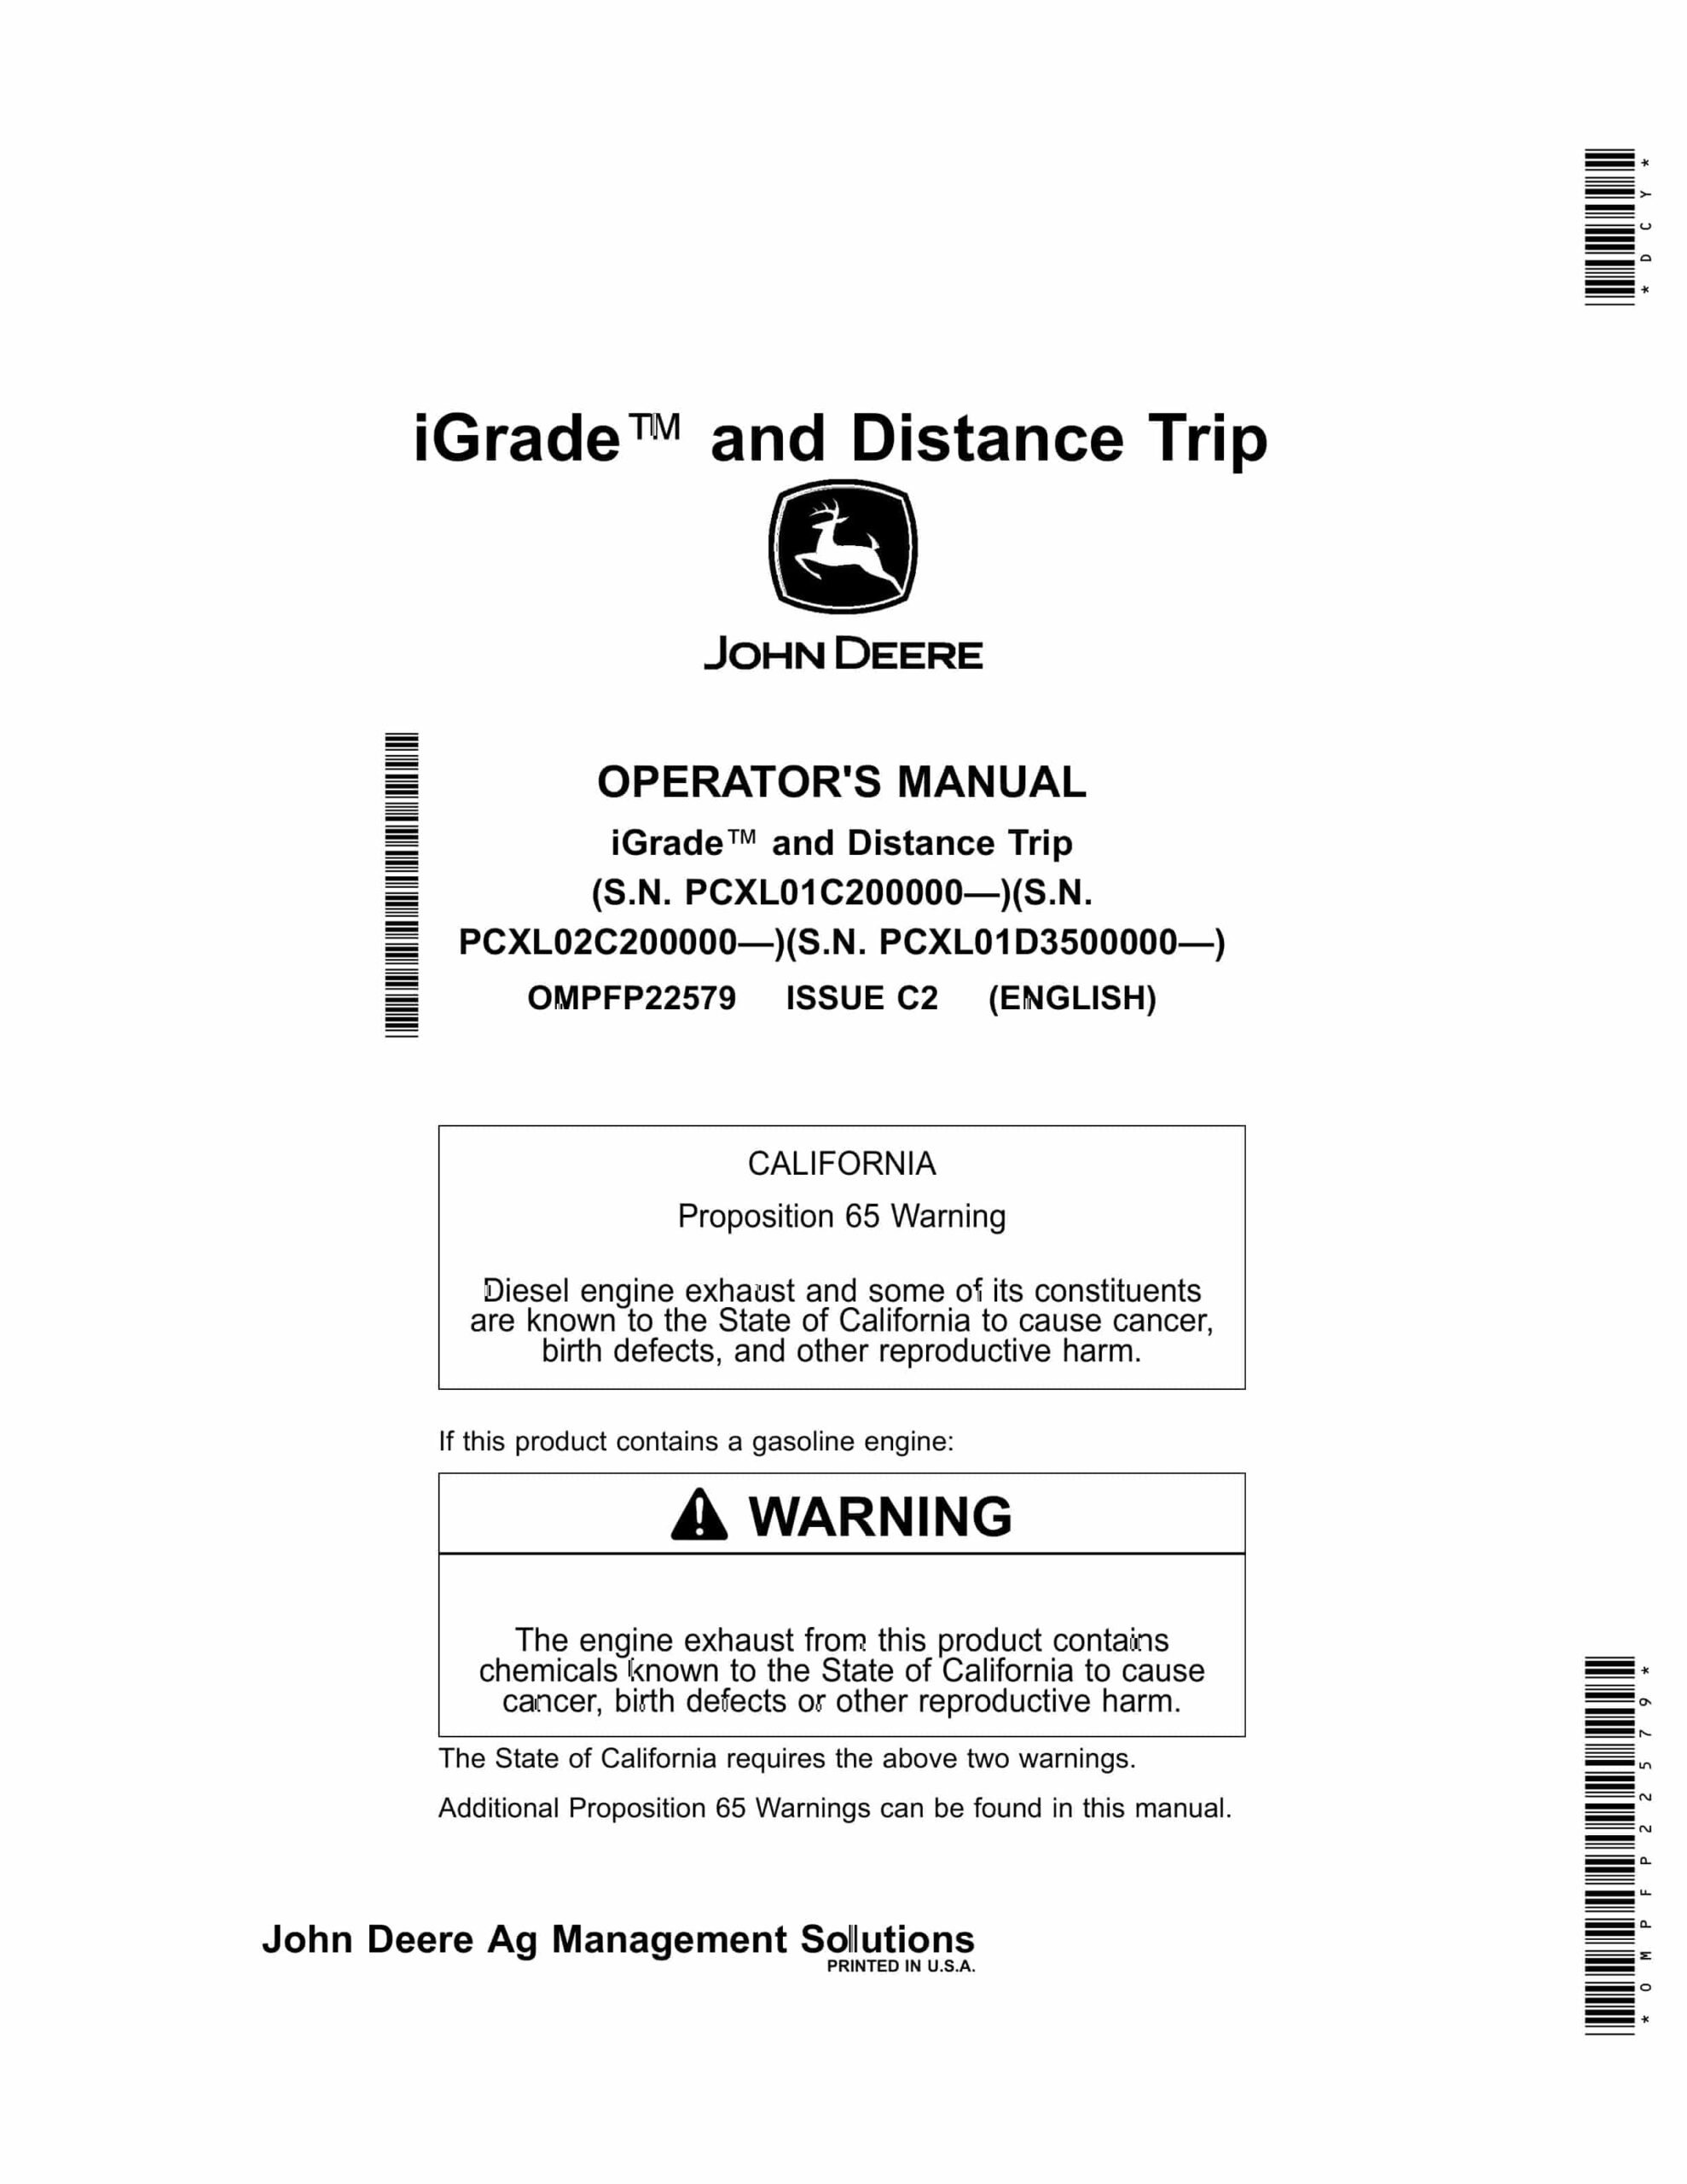 John Deere iGrade and Distance Trip Operator Manual OMPFP22579-1